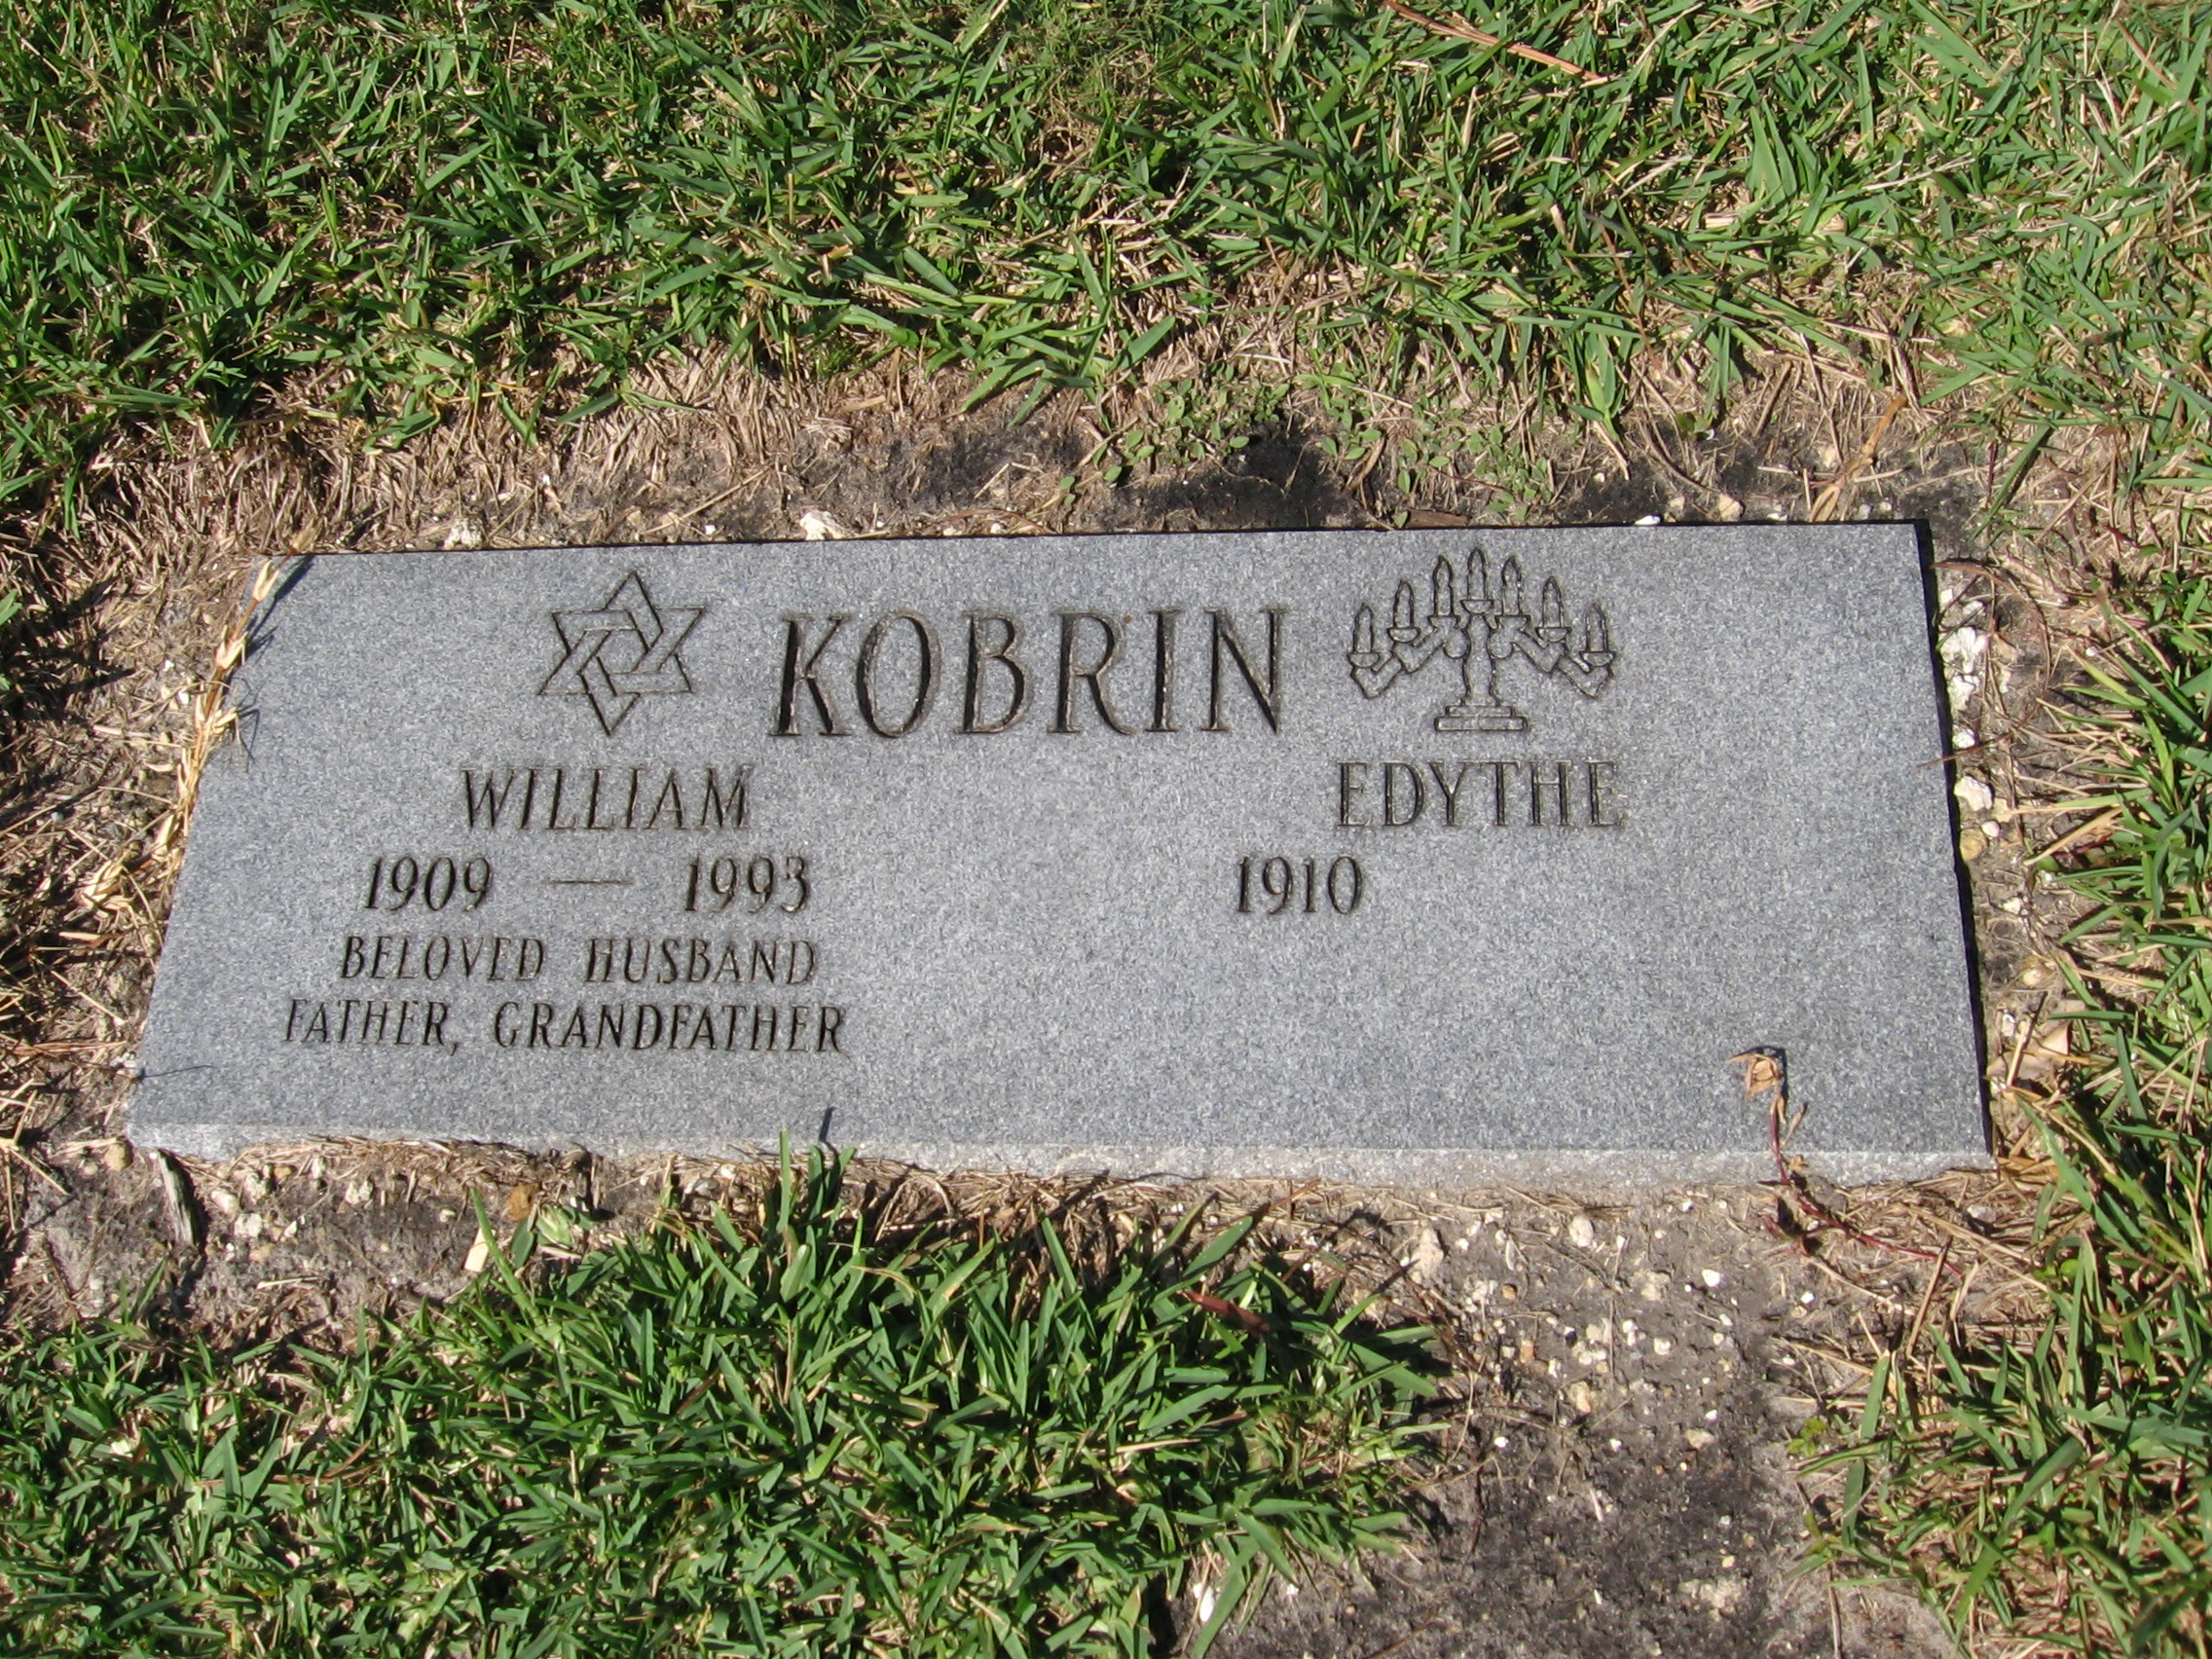 William Kobrin